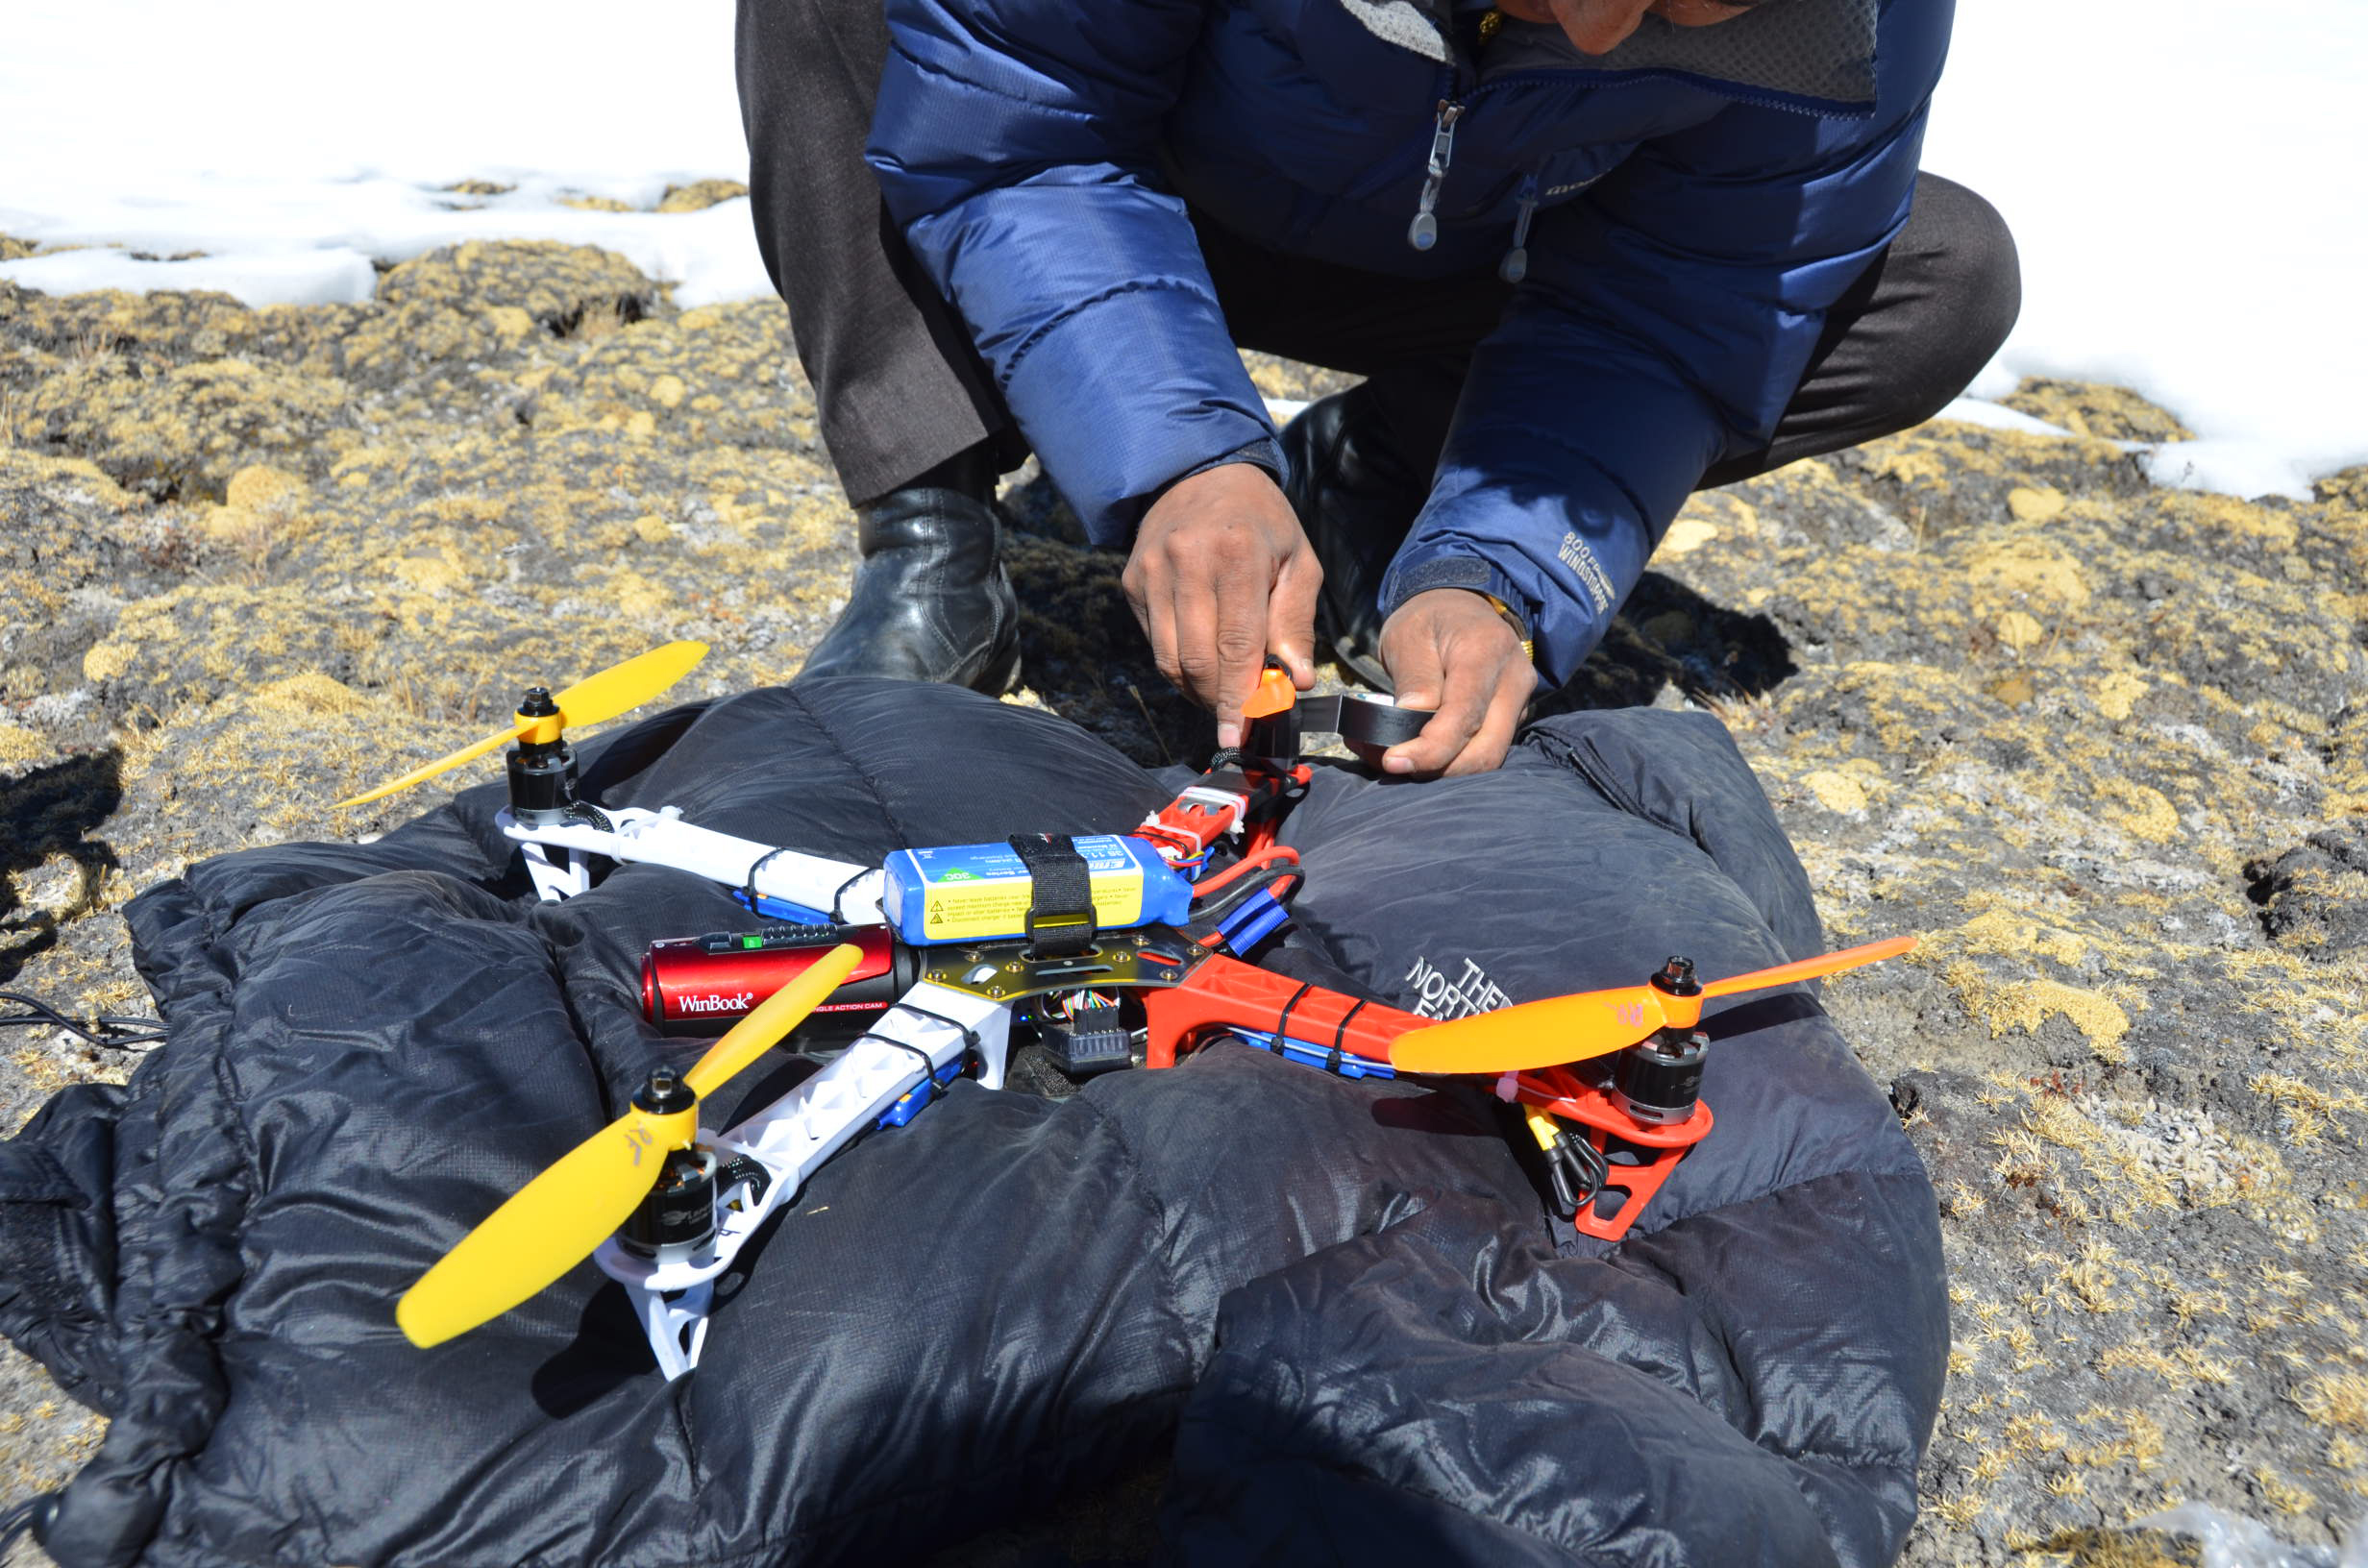 mck-wrk-3-26-15-drone-repair-at-kala-patthar-2015-03-26_00-04-48.jpg